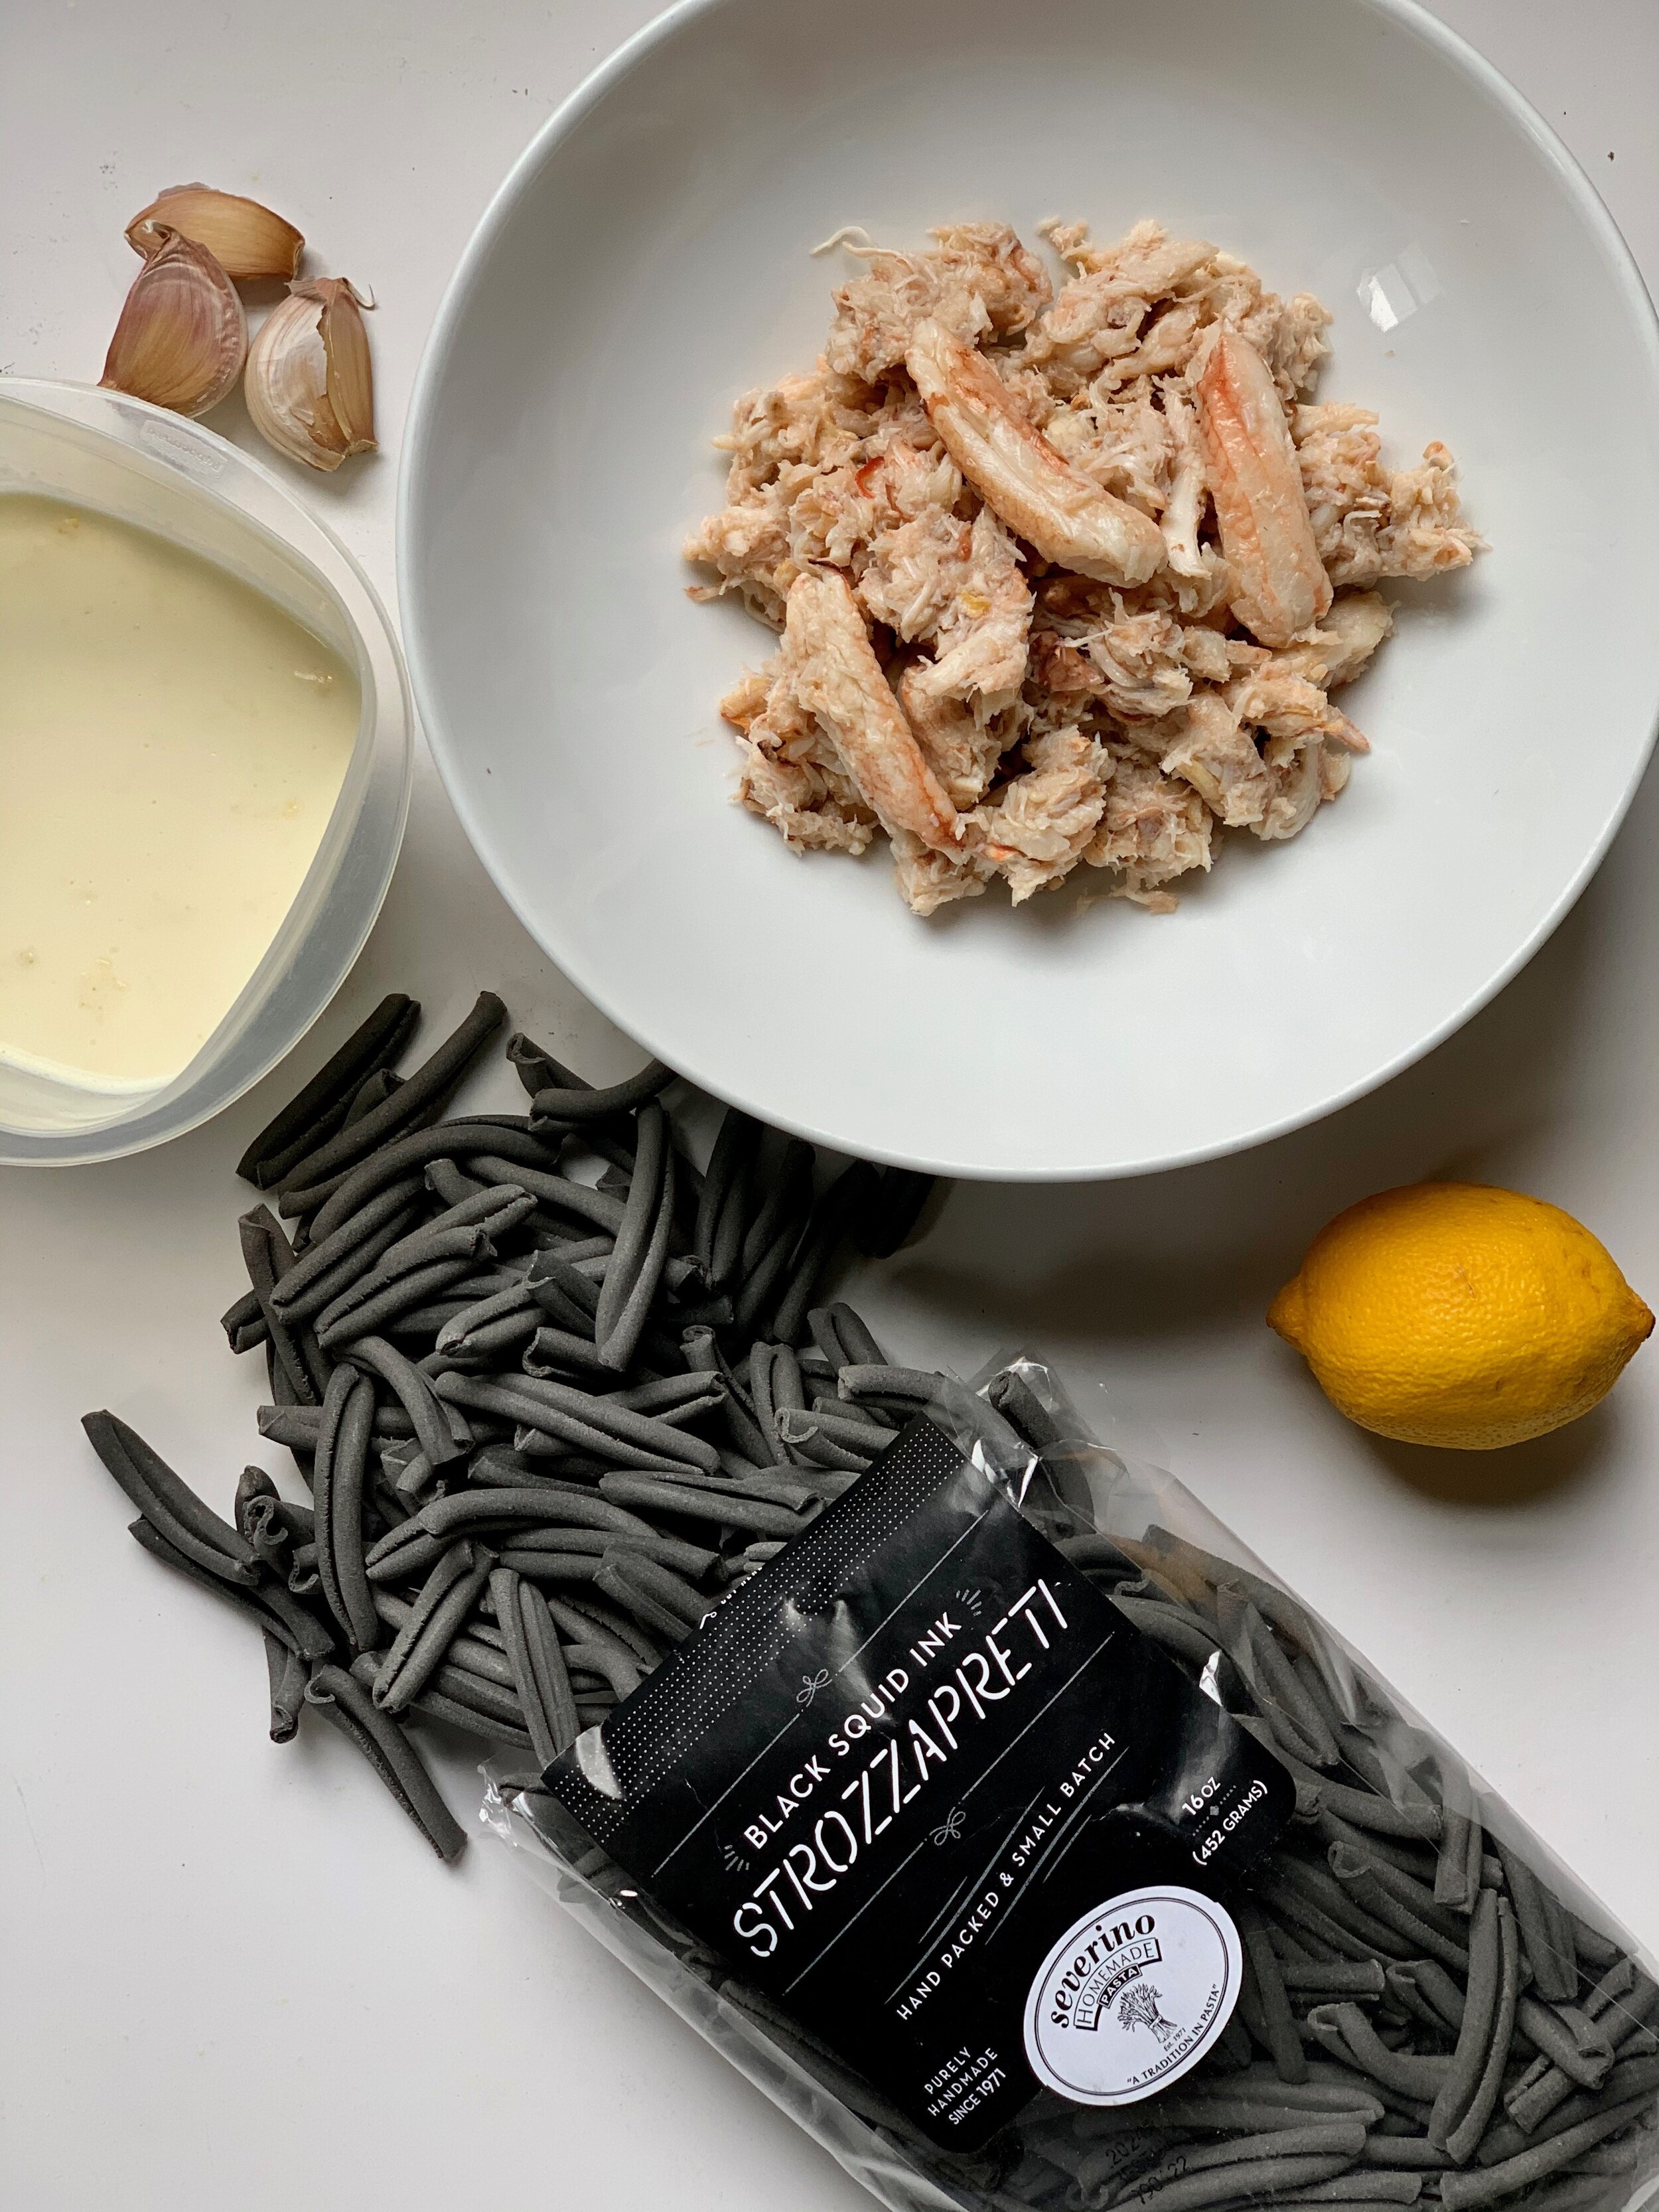 Saltbush and Squid Ink Tagliolini with Crab and Finger Lime - Pasta et Al